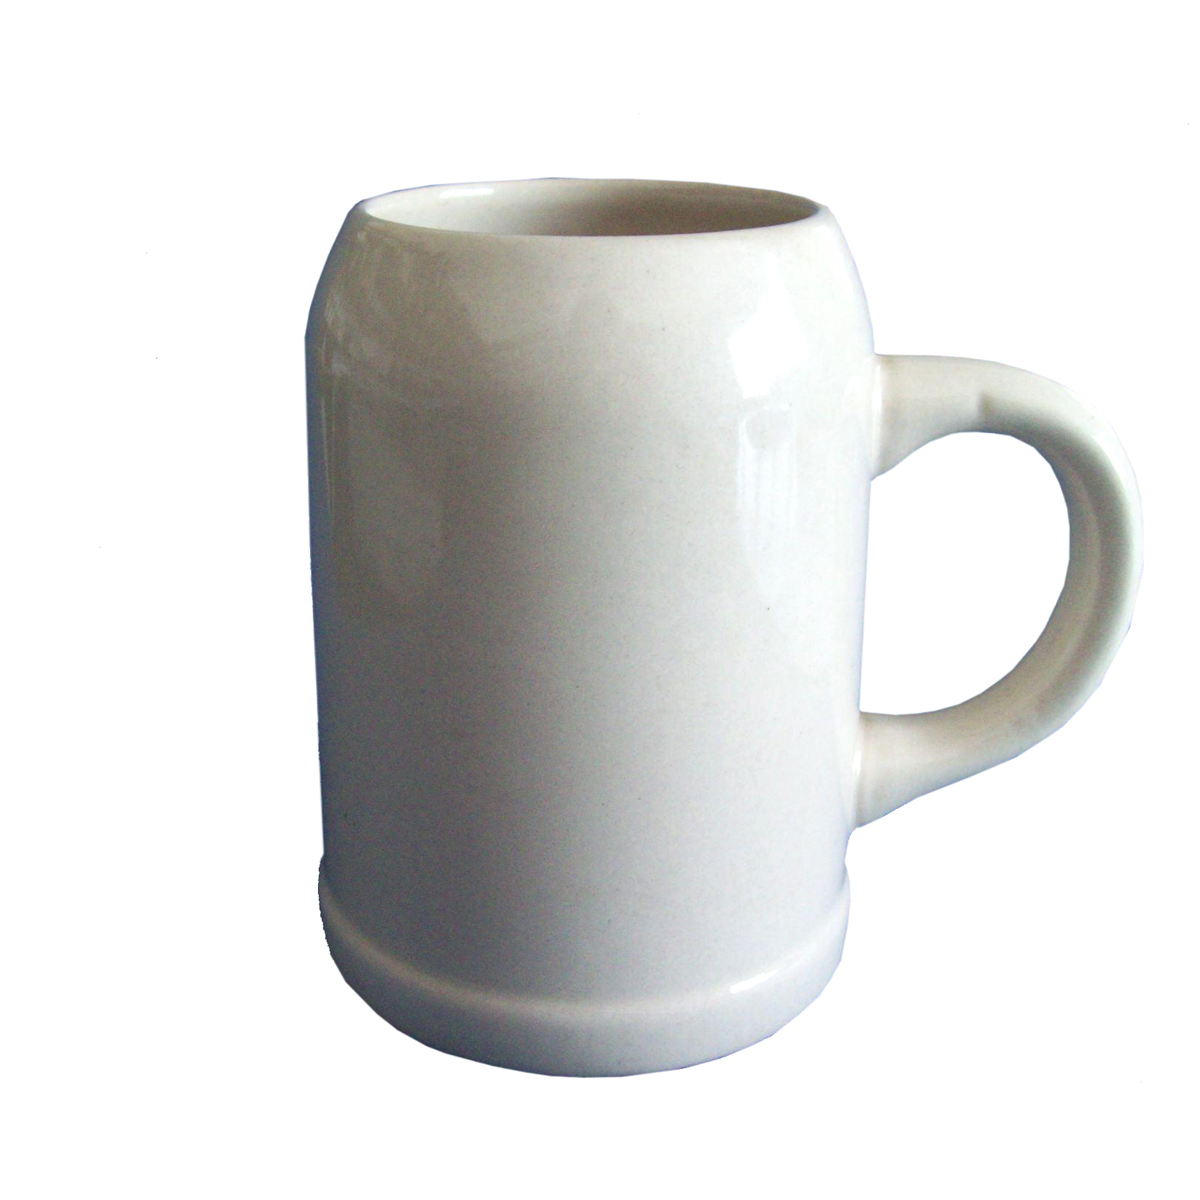 White ceramic beer mug